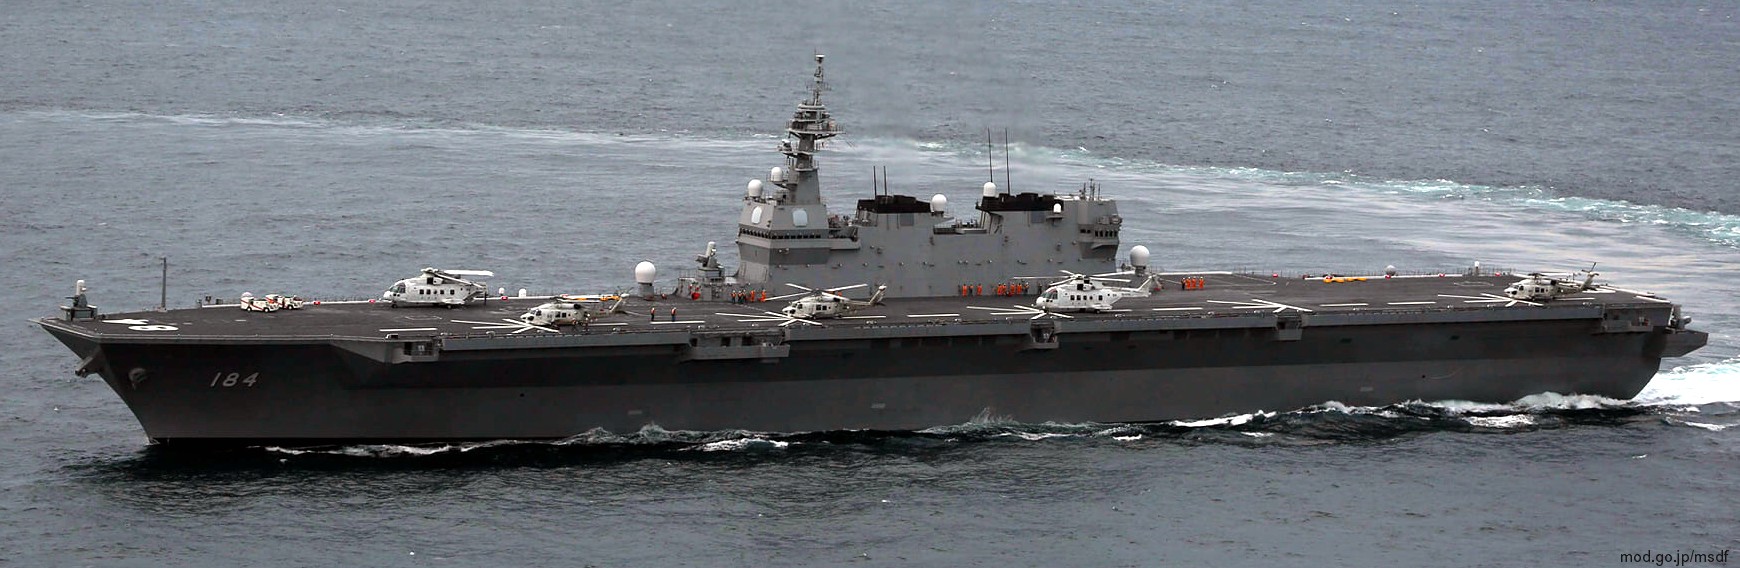 ddh-184 js kaga izumo class helicopter destroyer japan maritime self defense force jmsdf 11